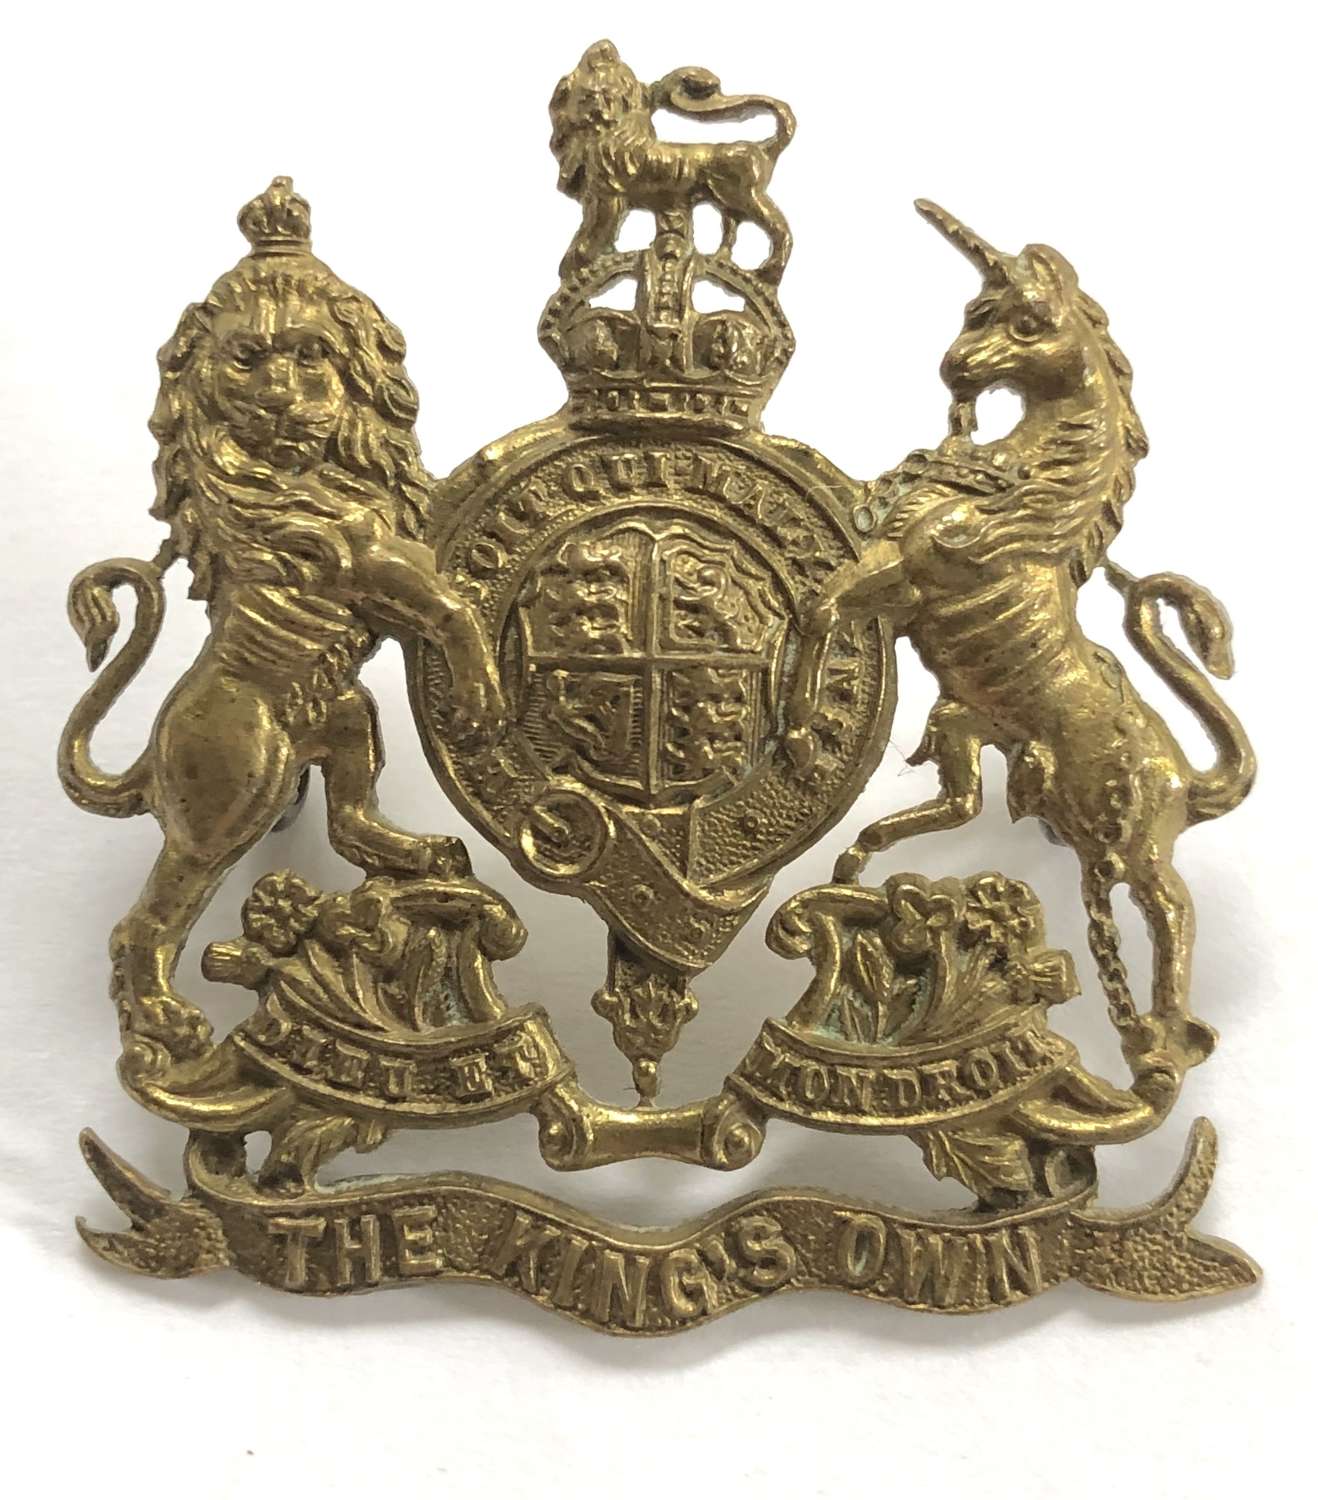 Norfolk Yeomanry (King's Own Royal Regiment) NCO’s arm badge.